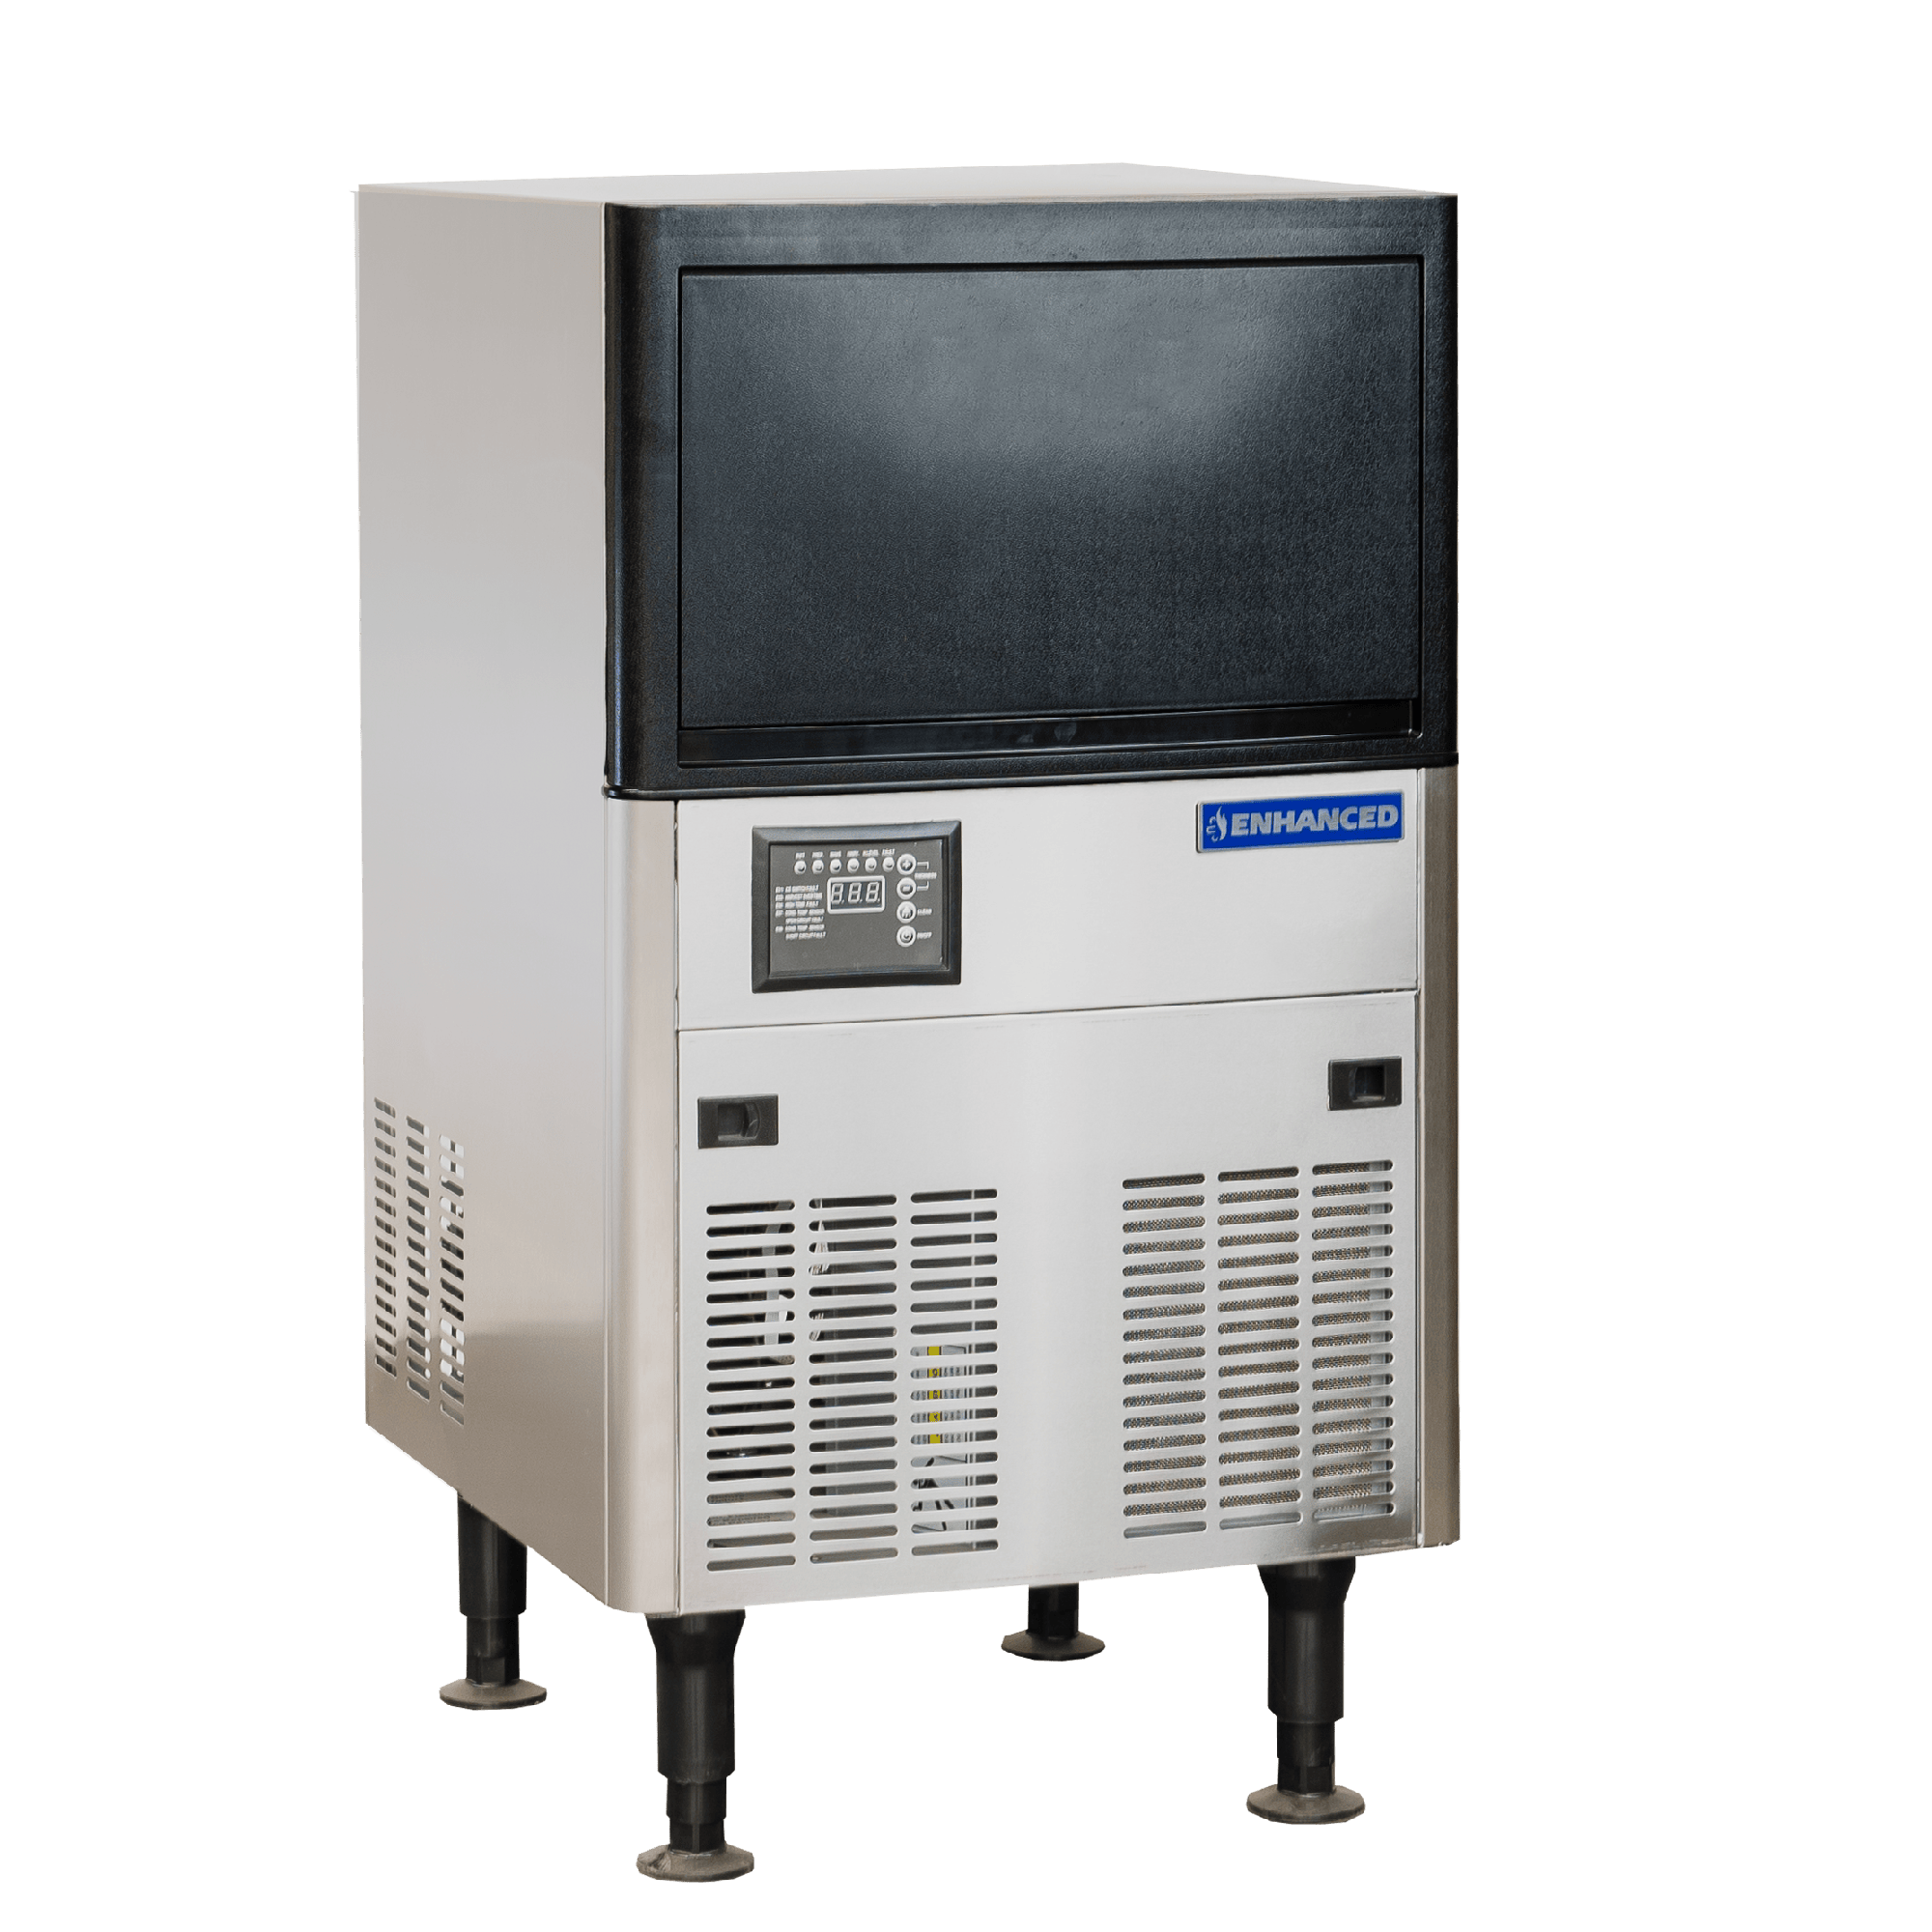 *On Sale* ESK-129S Enhanced Undercounter Ice Machine, 120 Lbs. Capacity (was $1,395)